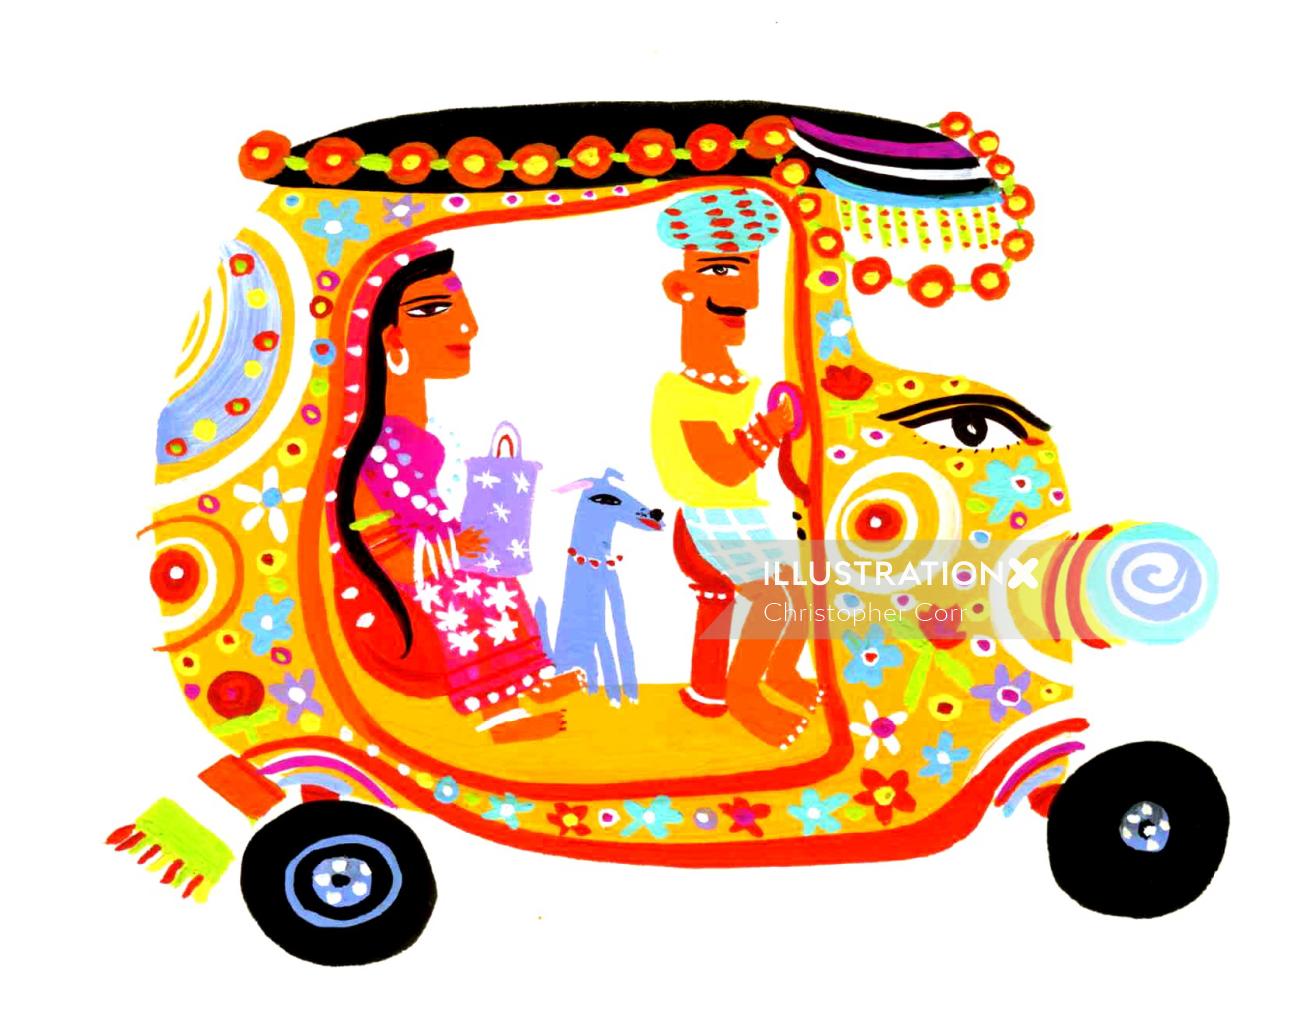 Illustration of Rickshaw